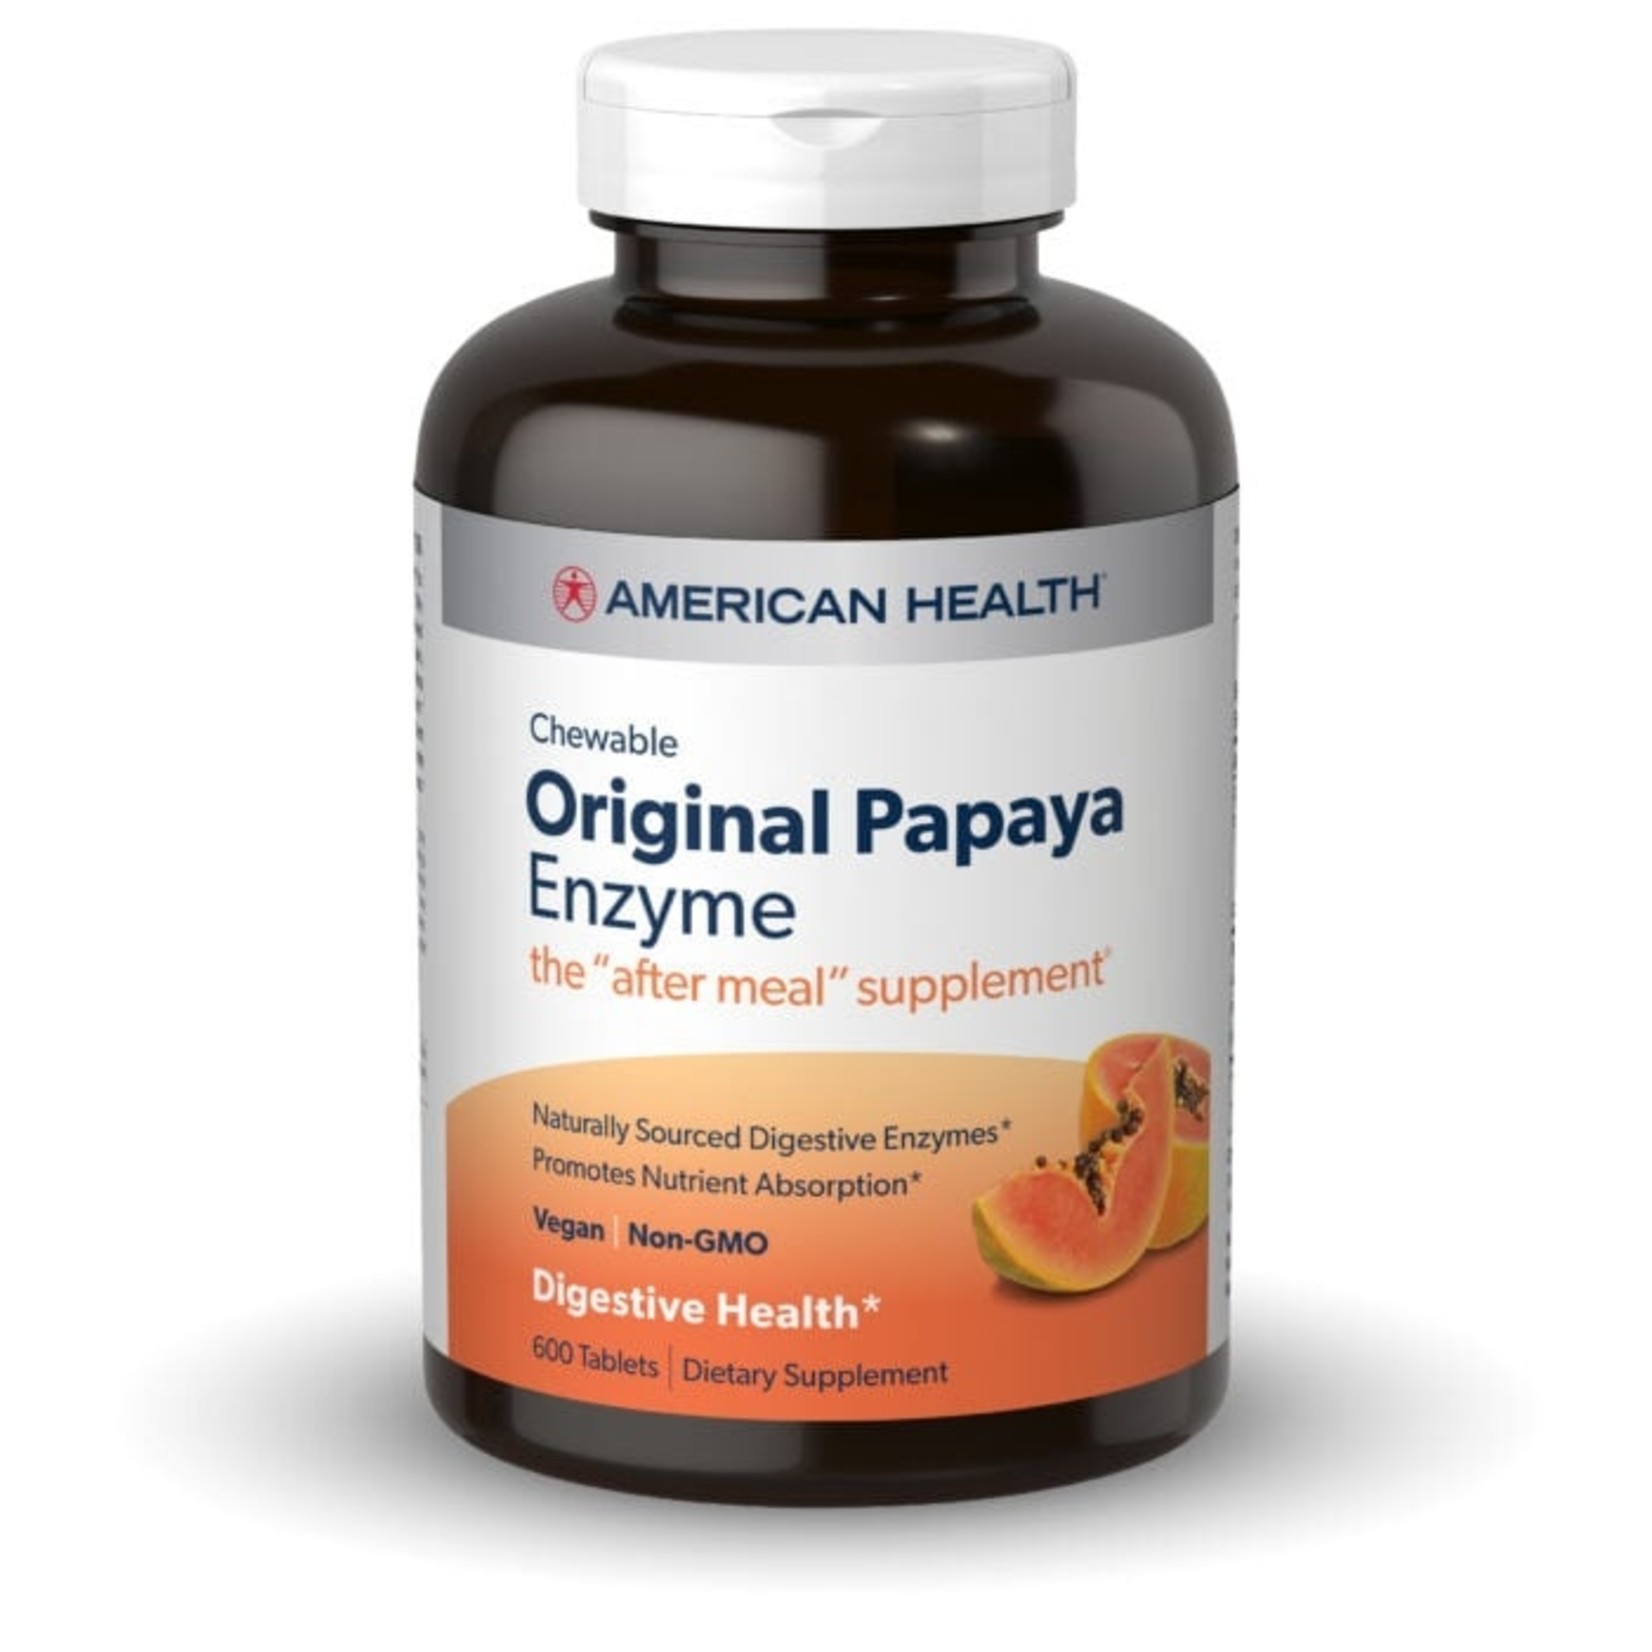 American Health American Health - Original Papaya Enzyme Chewable Tablets - 600 Tablets